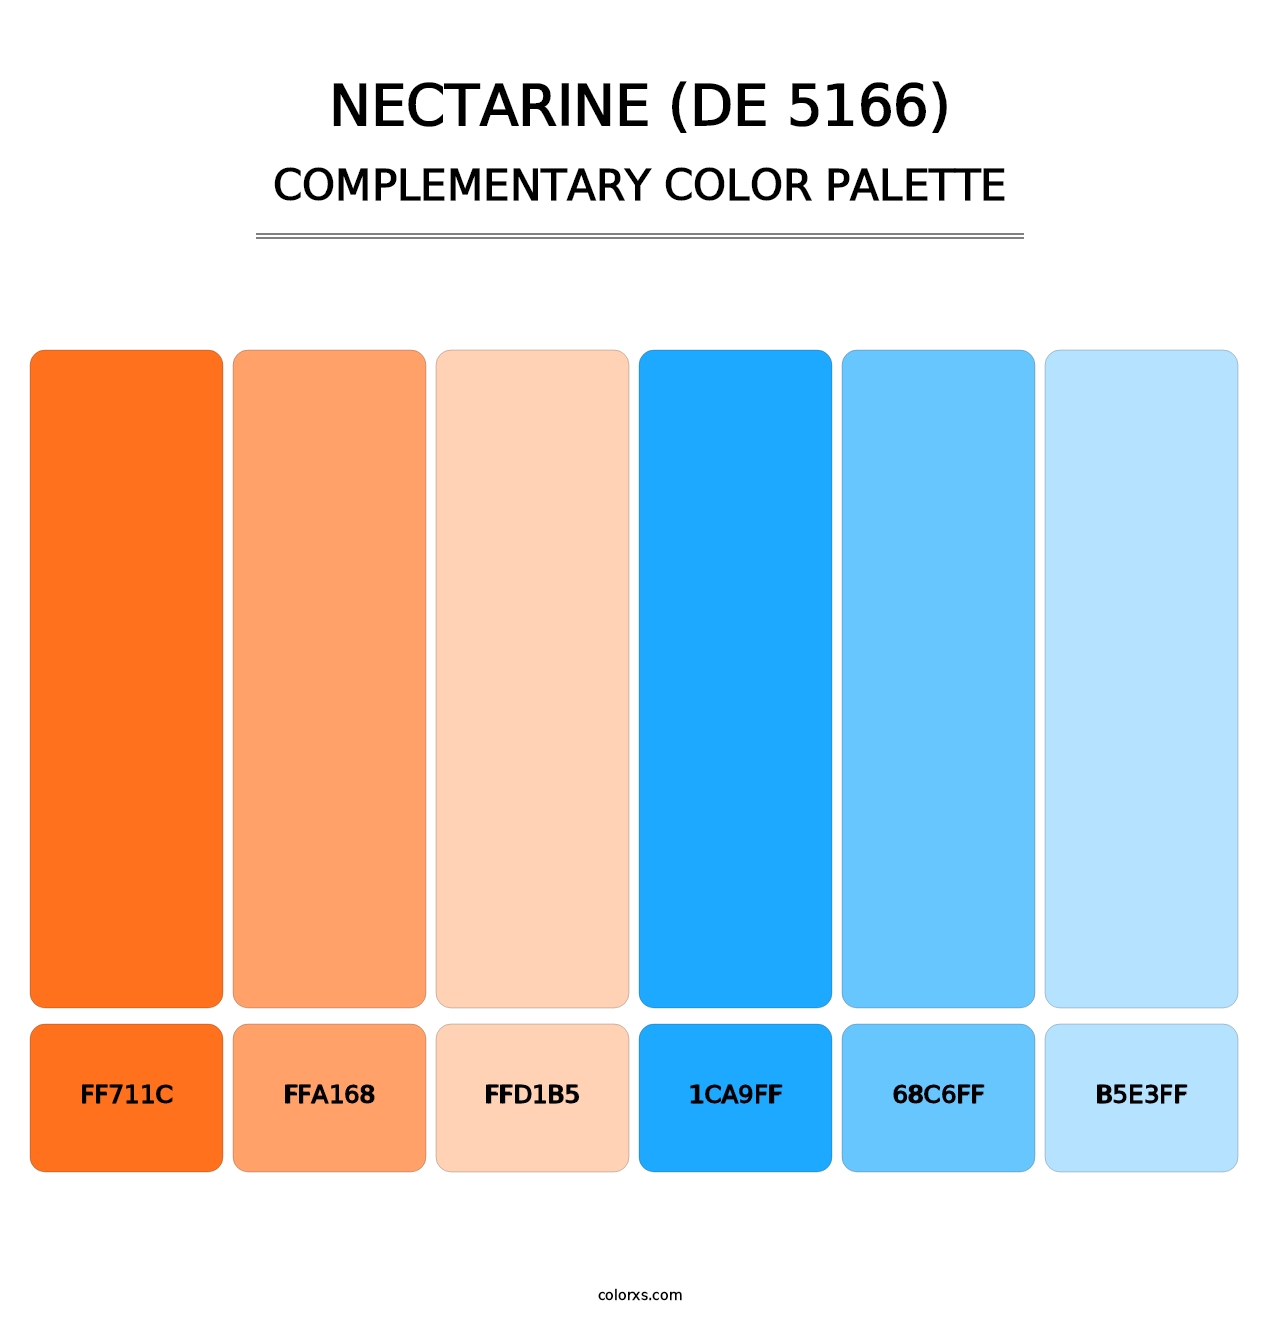 Nectarine (DE 5166) - Complementary Color Palette